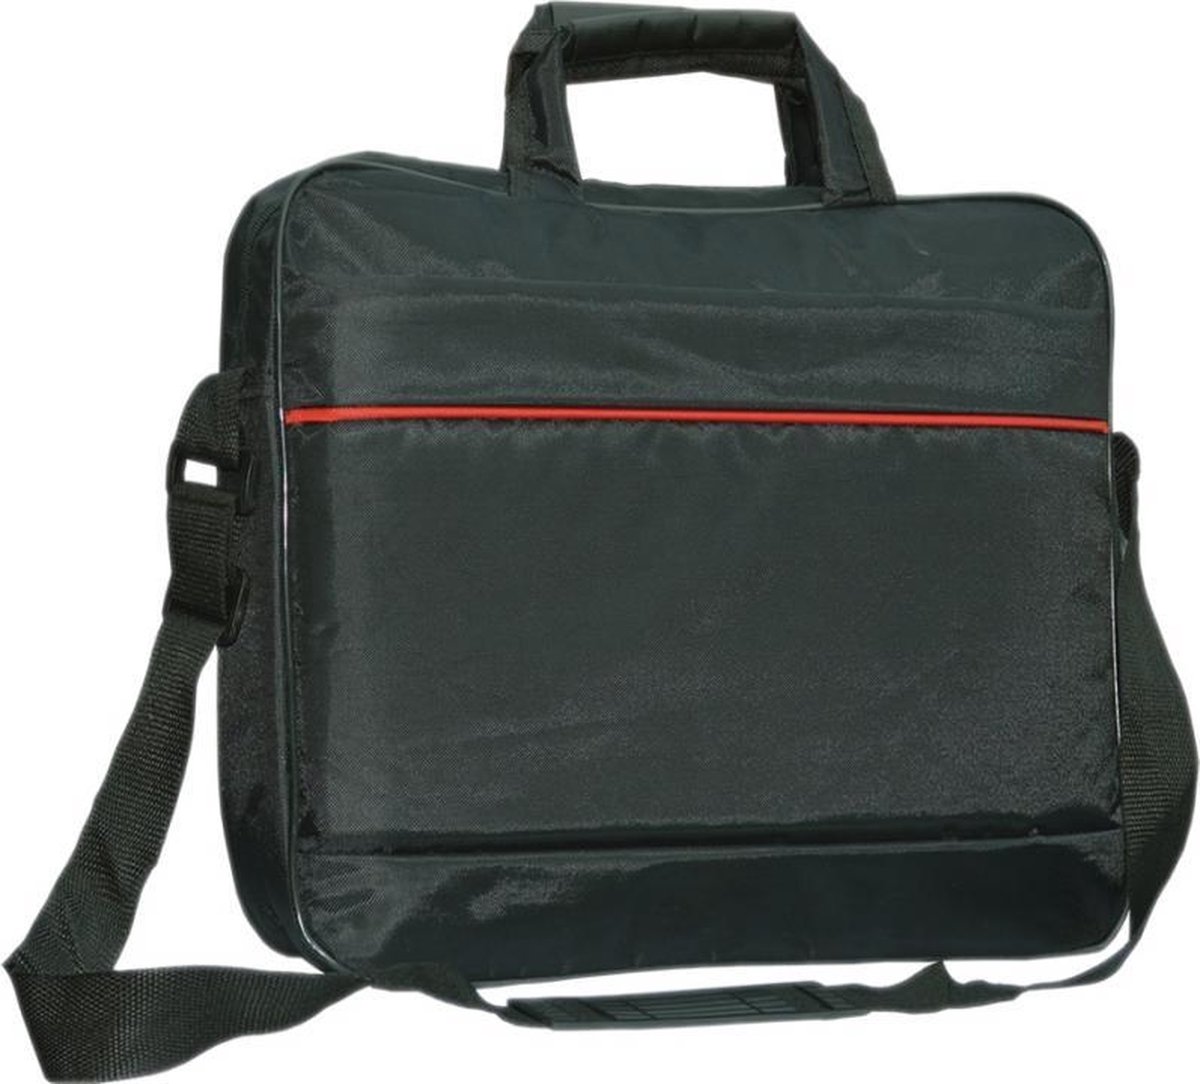 Asus Chromebook C300 laptoptas messenger bag / schoudertas / tas , zwart , merk i12Cover